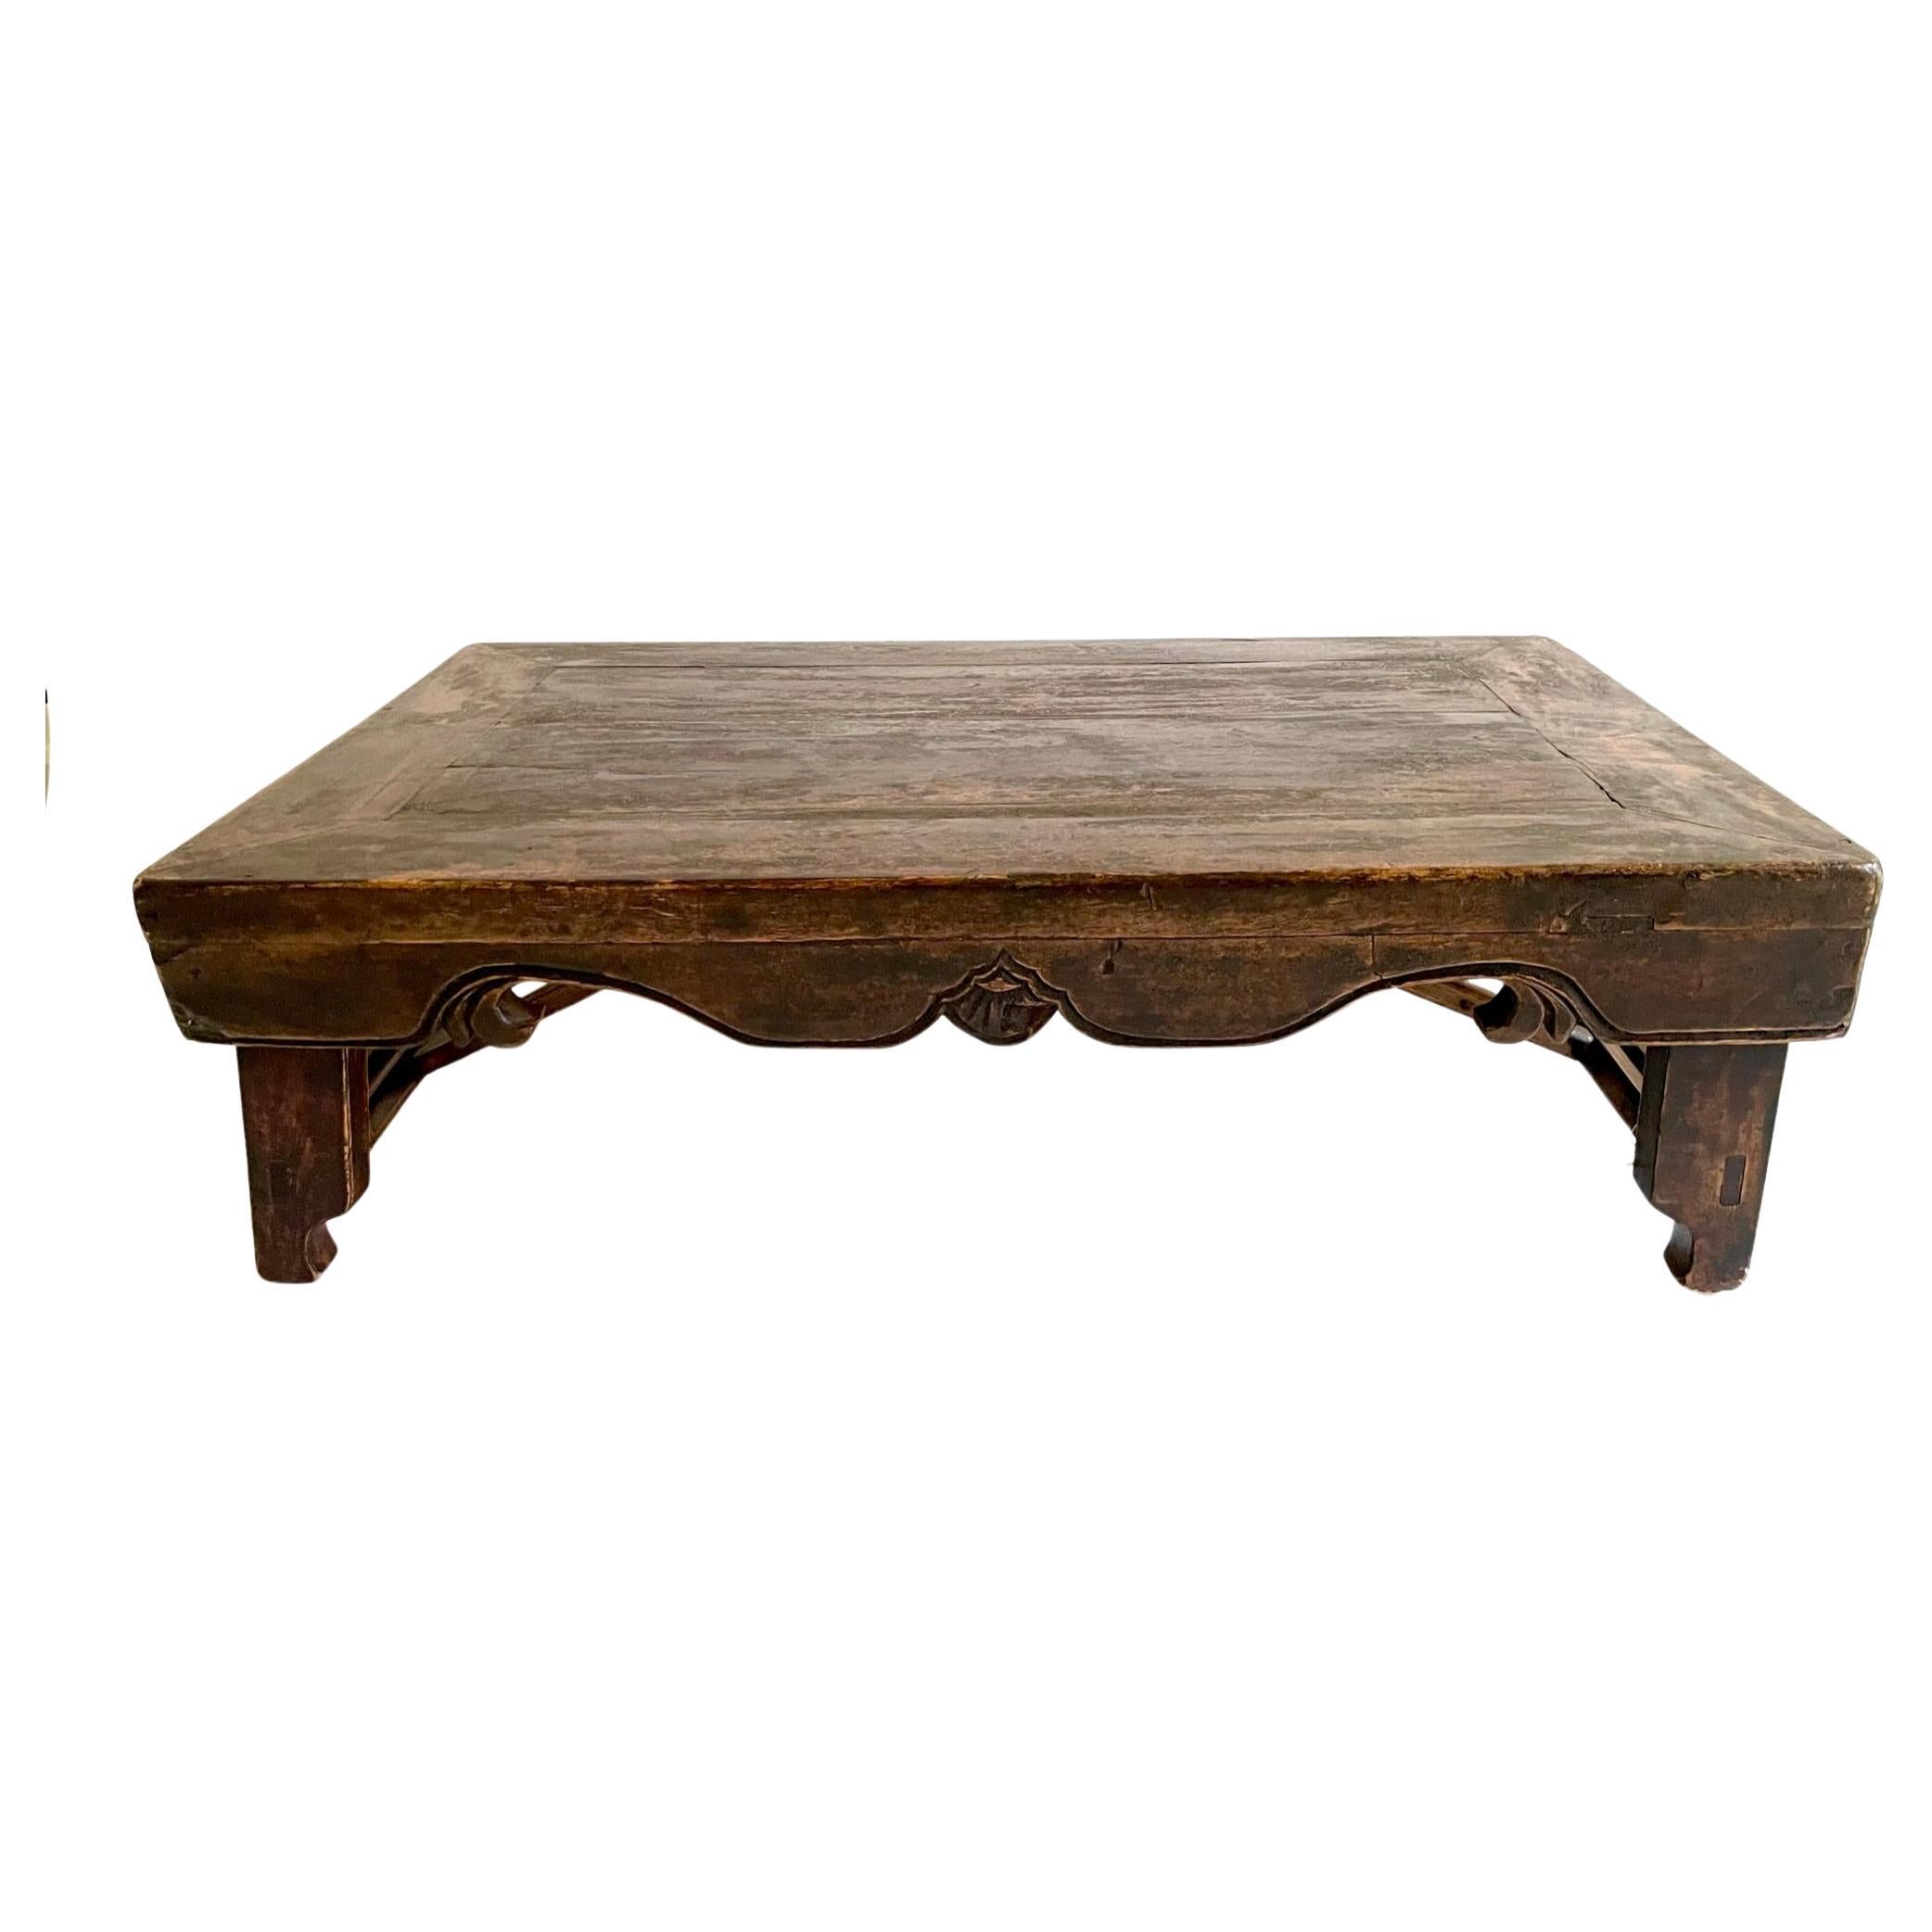 Rare table basse pliante chinoise du 19ème siècle "Tableang Table"